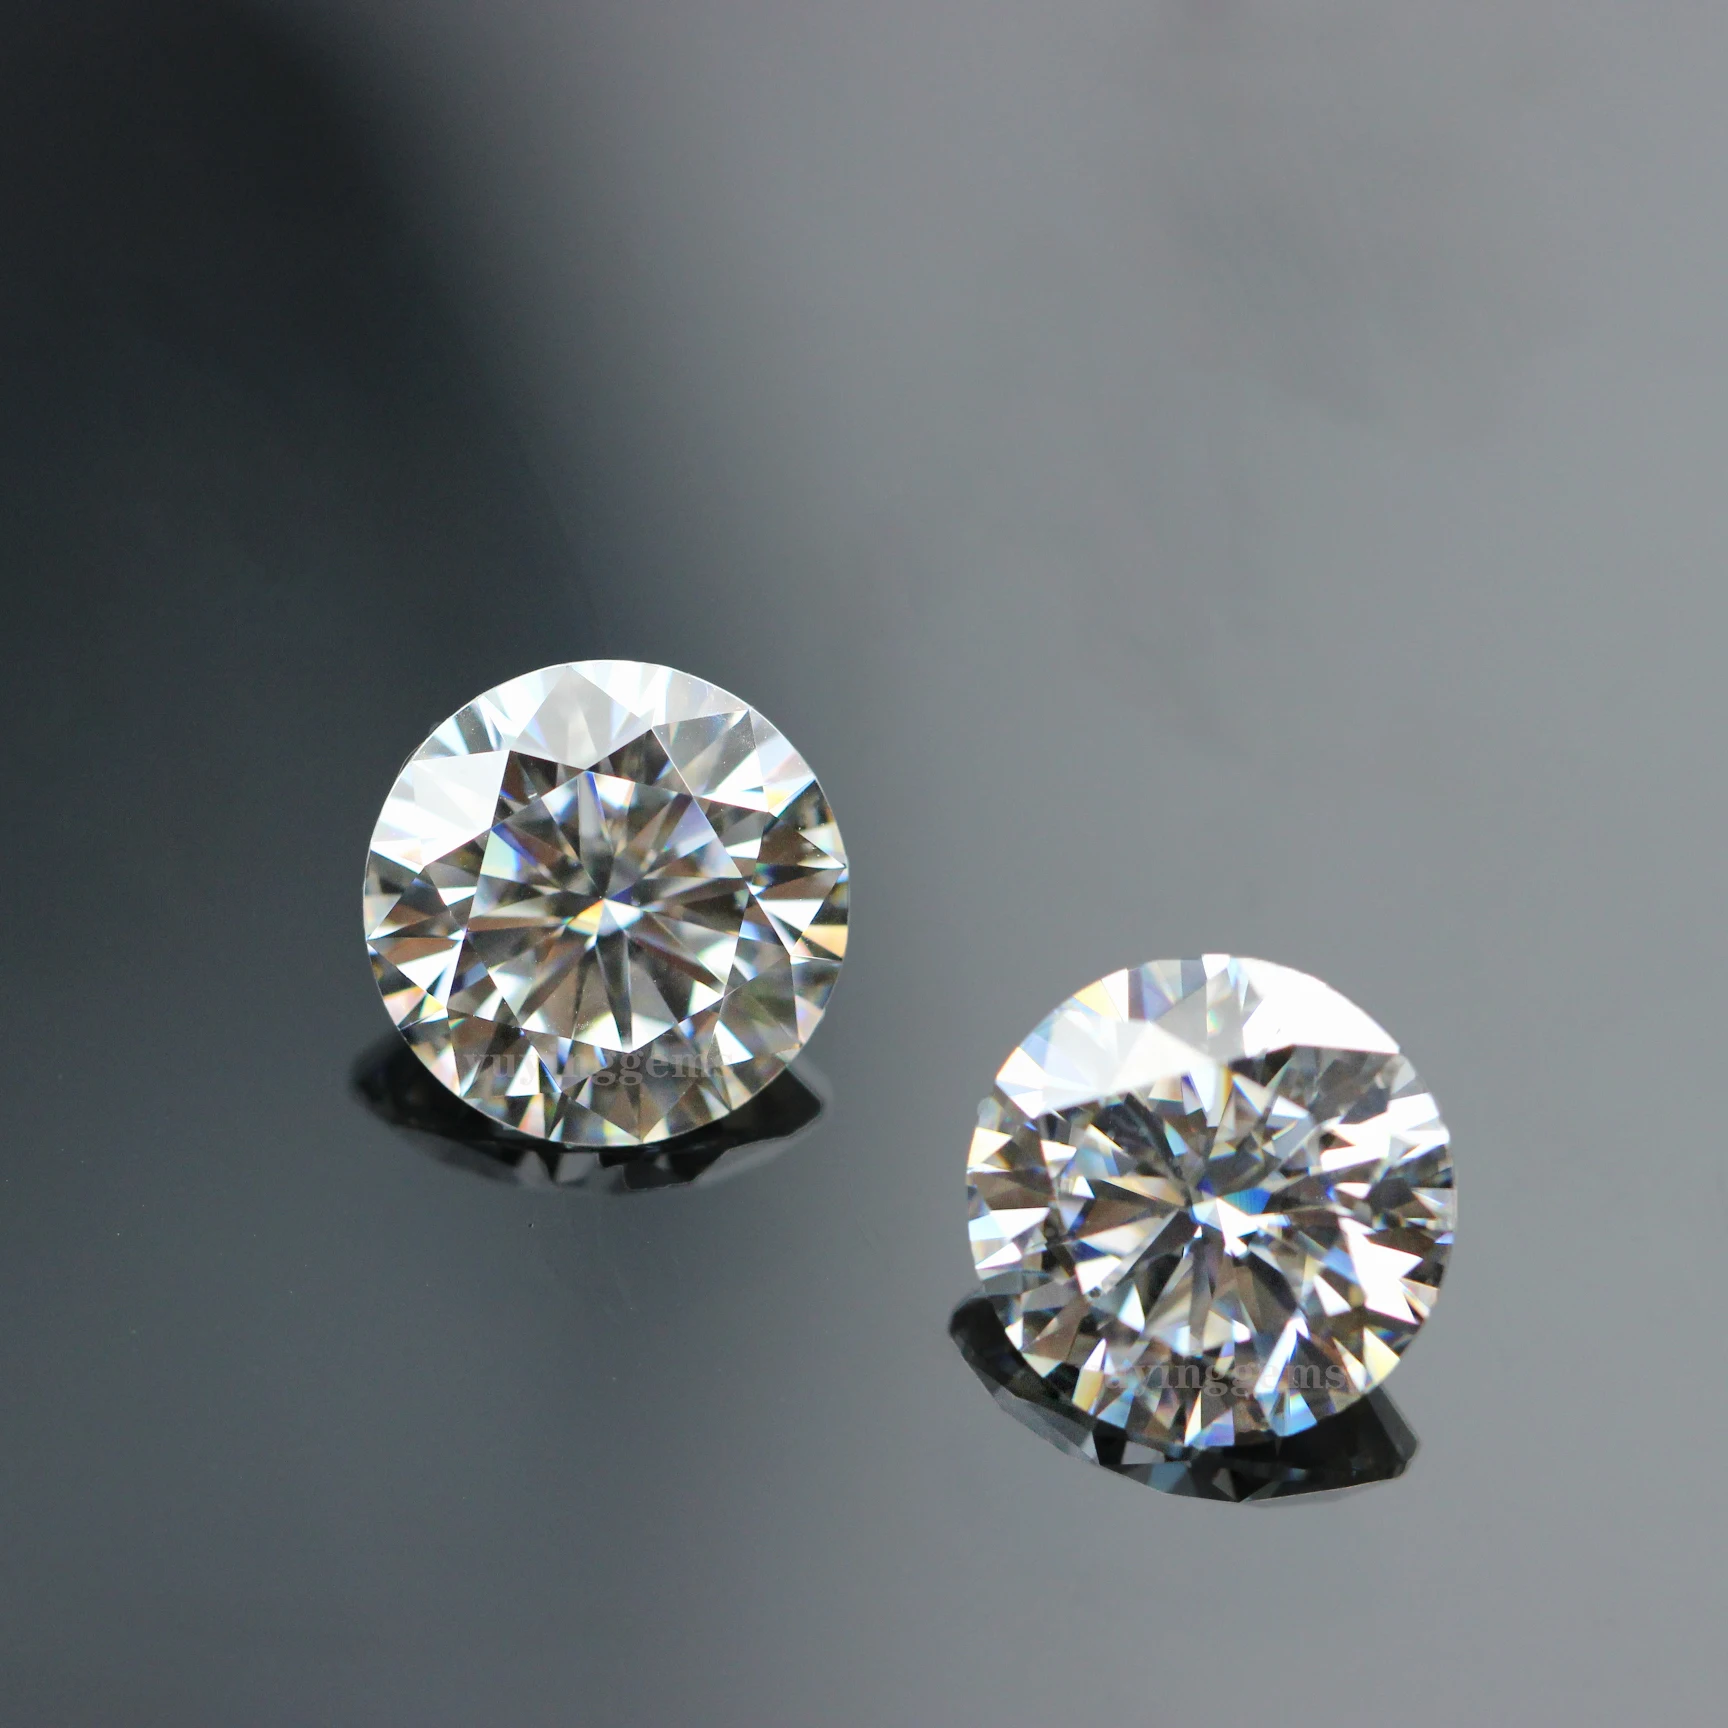 

GRA Synthetic DEF/VVS1 Moissanite Diamond Gemstones Certificate 1.0 Carat Jewelry Making Loose Precious Gemstone Yu Ying Gems *